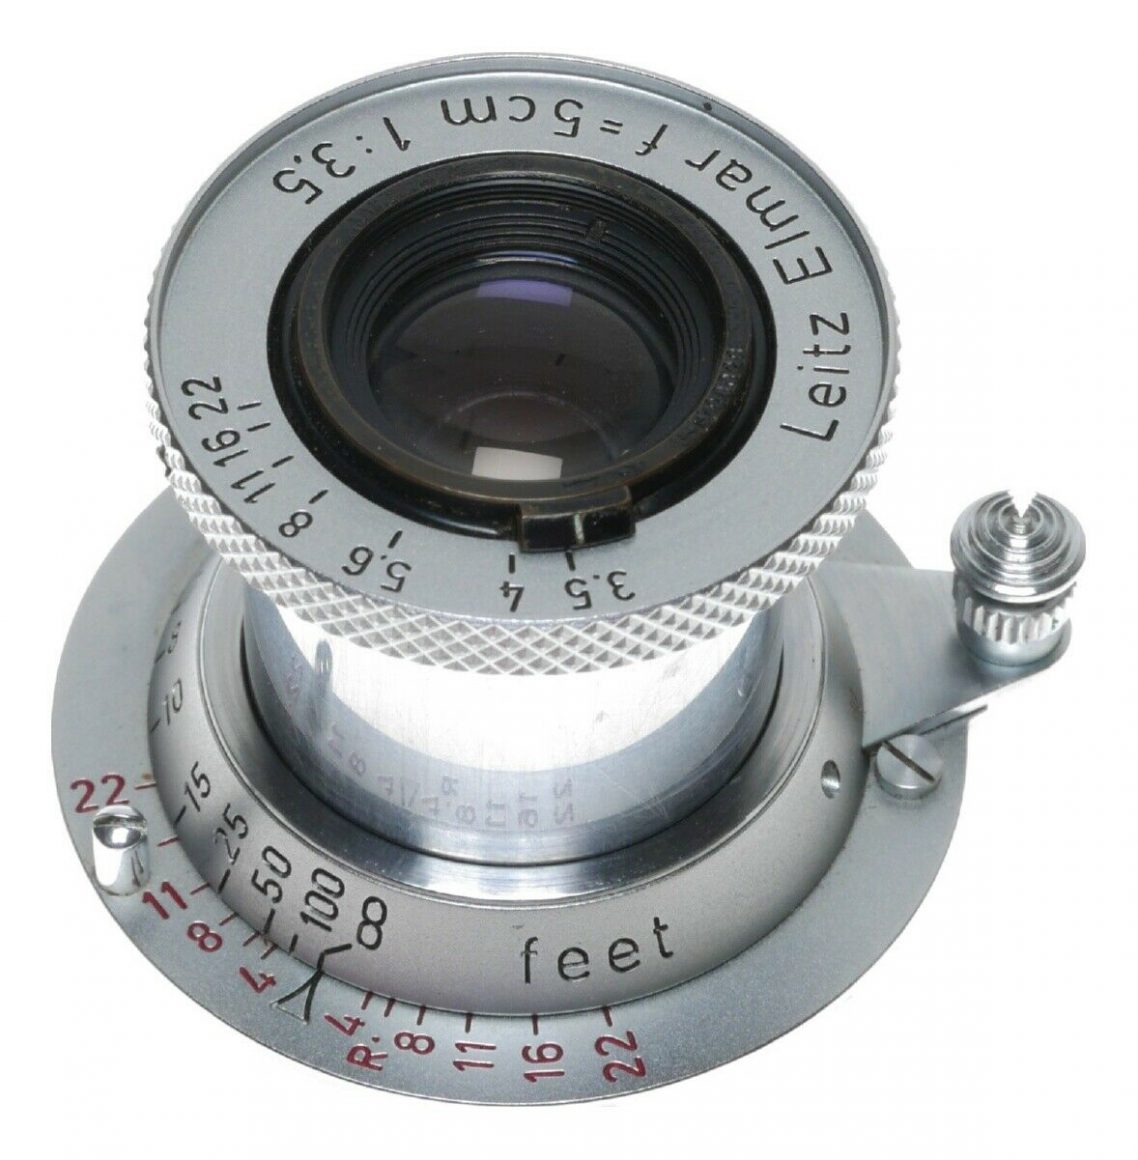 Leitz Elmar 50mm F/3.5 [II] | LENS-DB.COM